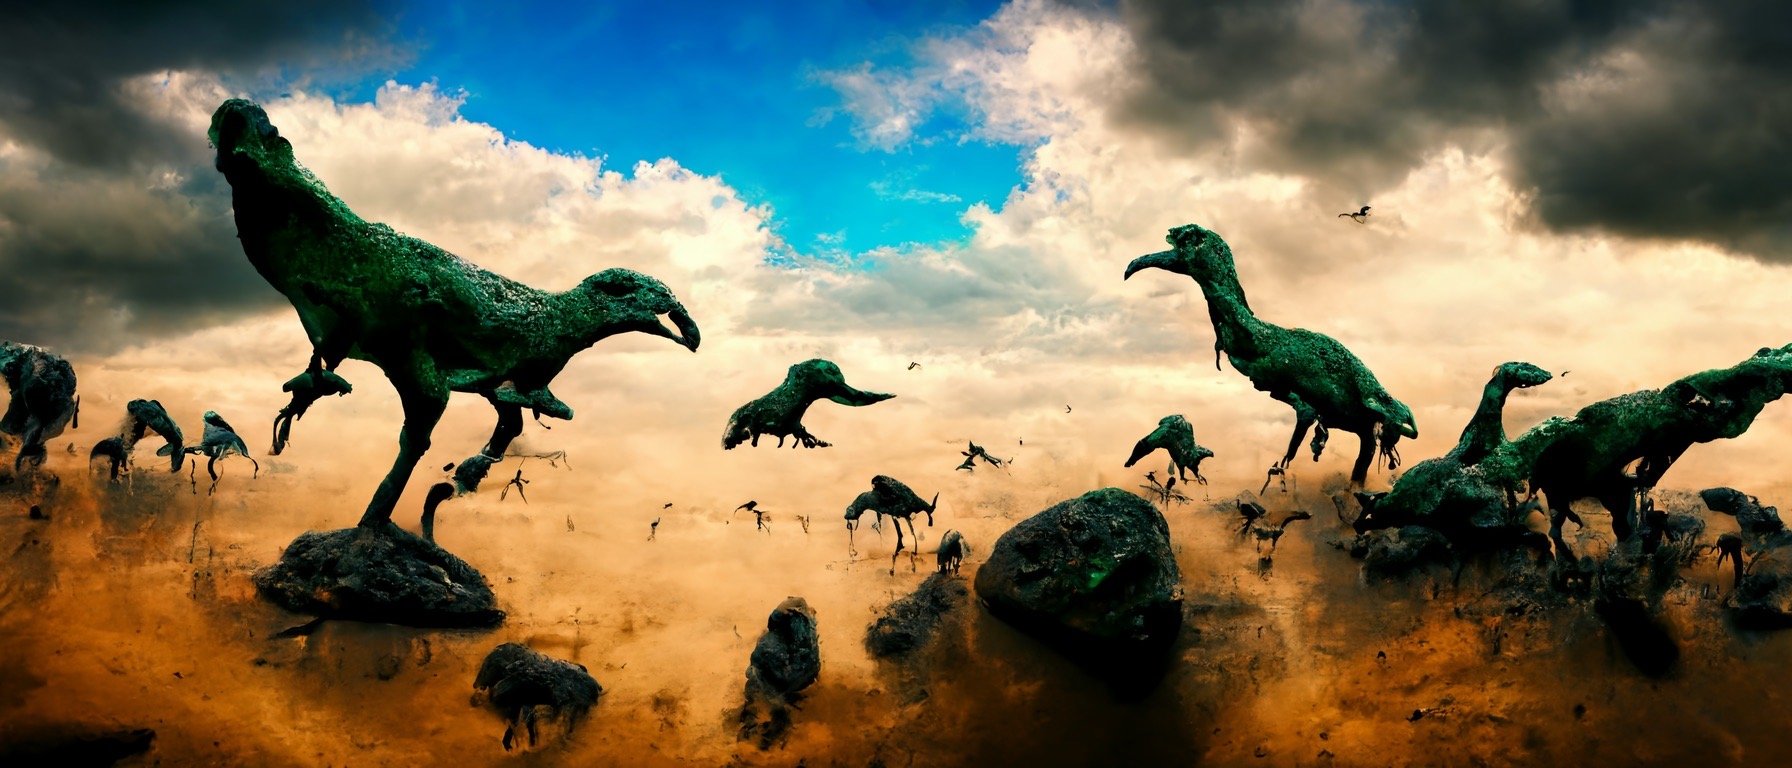 89d9fa7c-a49c-4c3e-ad50-1f61d8be643b_S3RAPH_dinosaur_footprint_in_mud._Flock_of_birds_in_green_prehistoric_jungle._Epic_sky._Cinematic_compositi.JPG